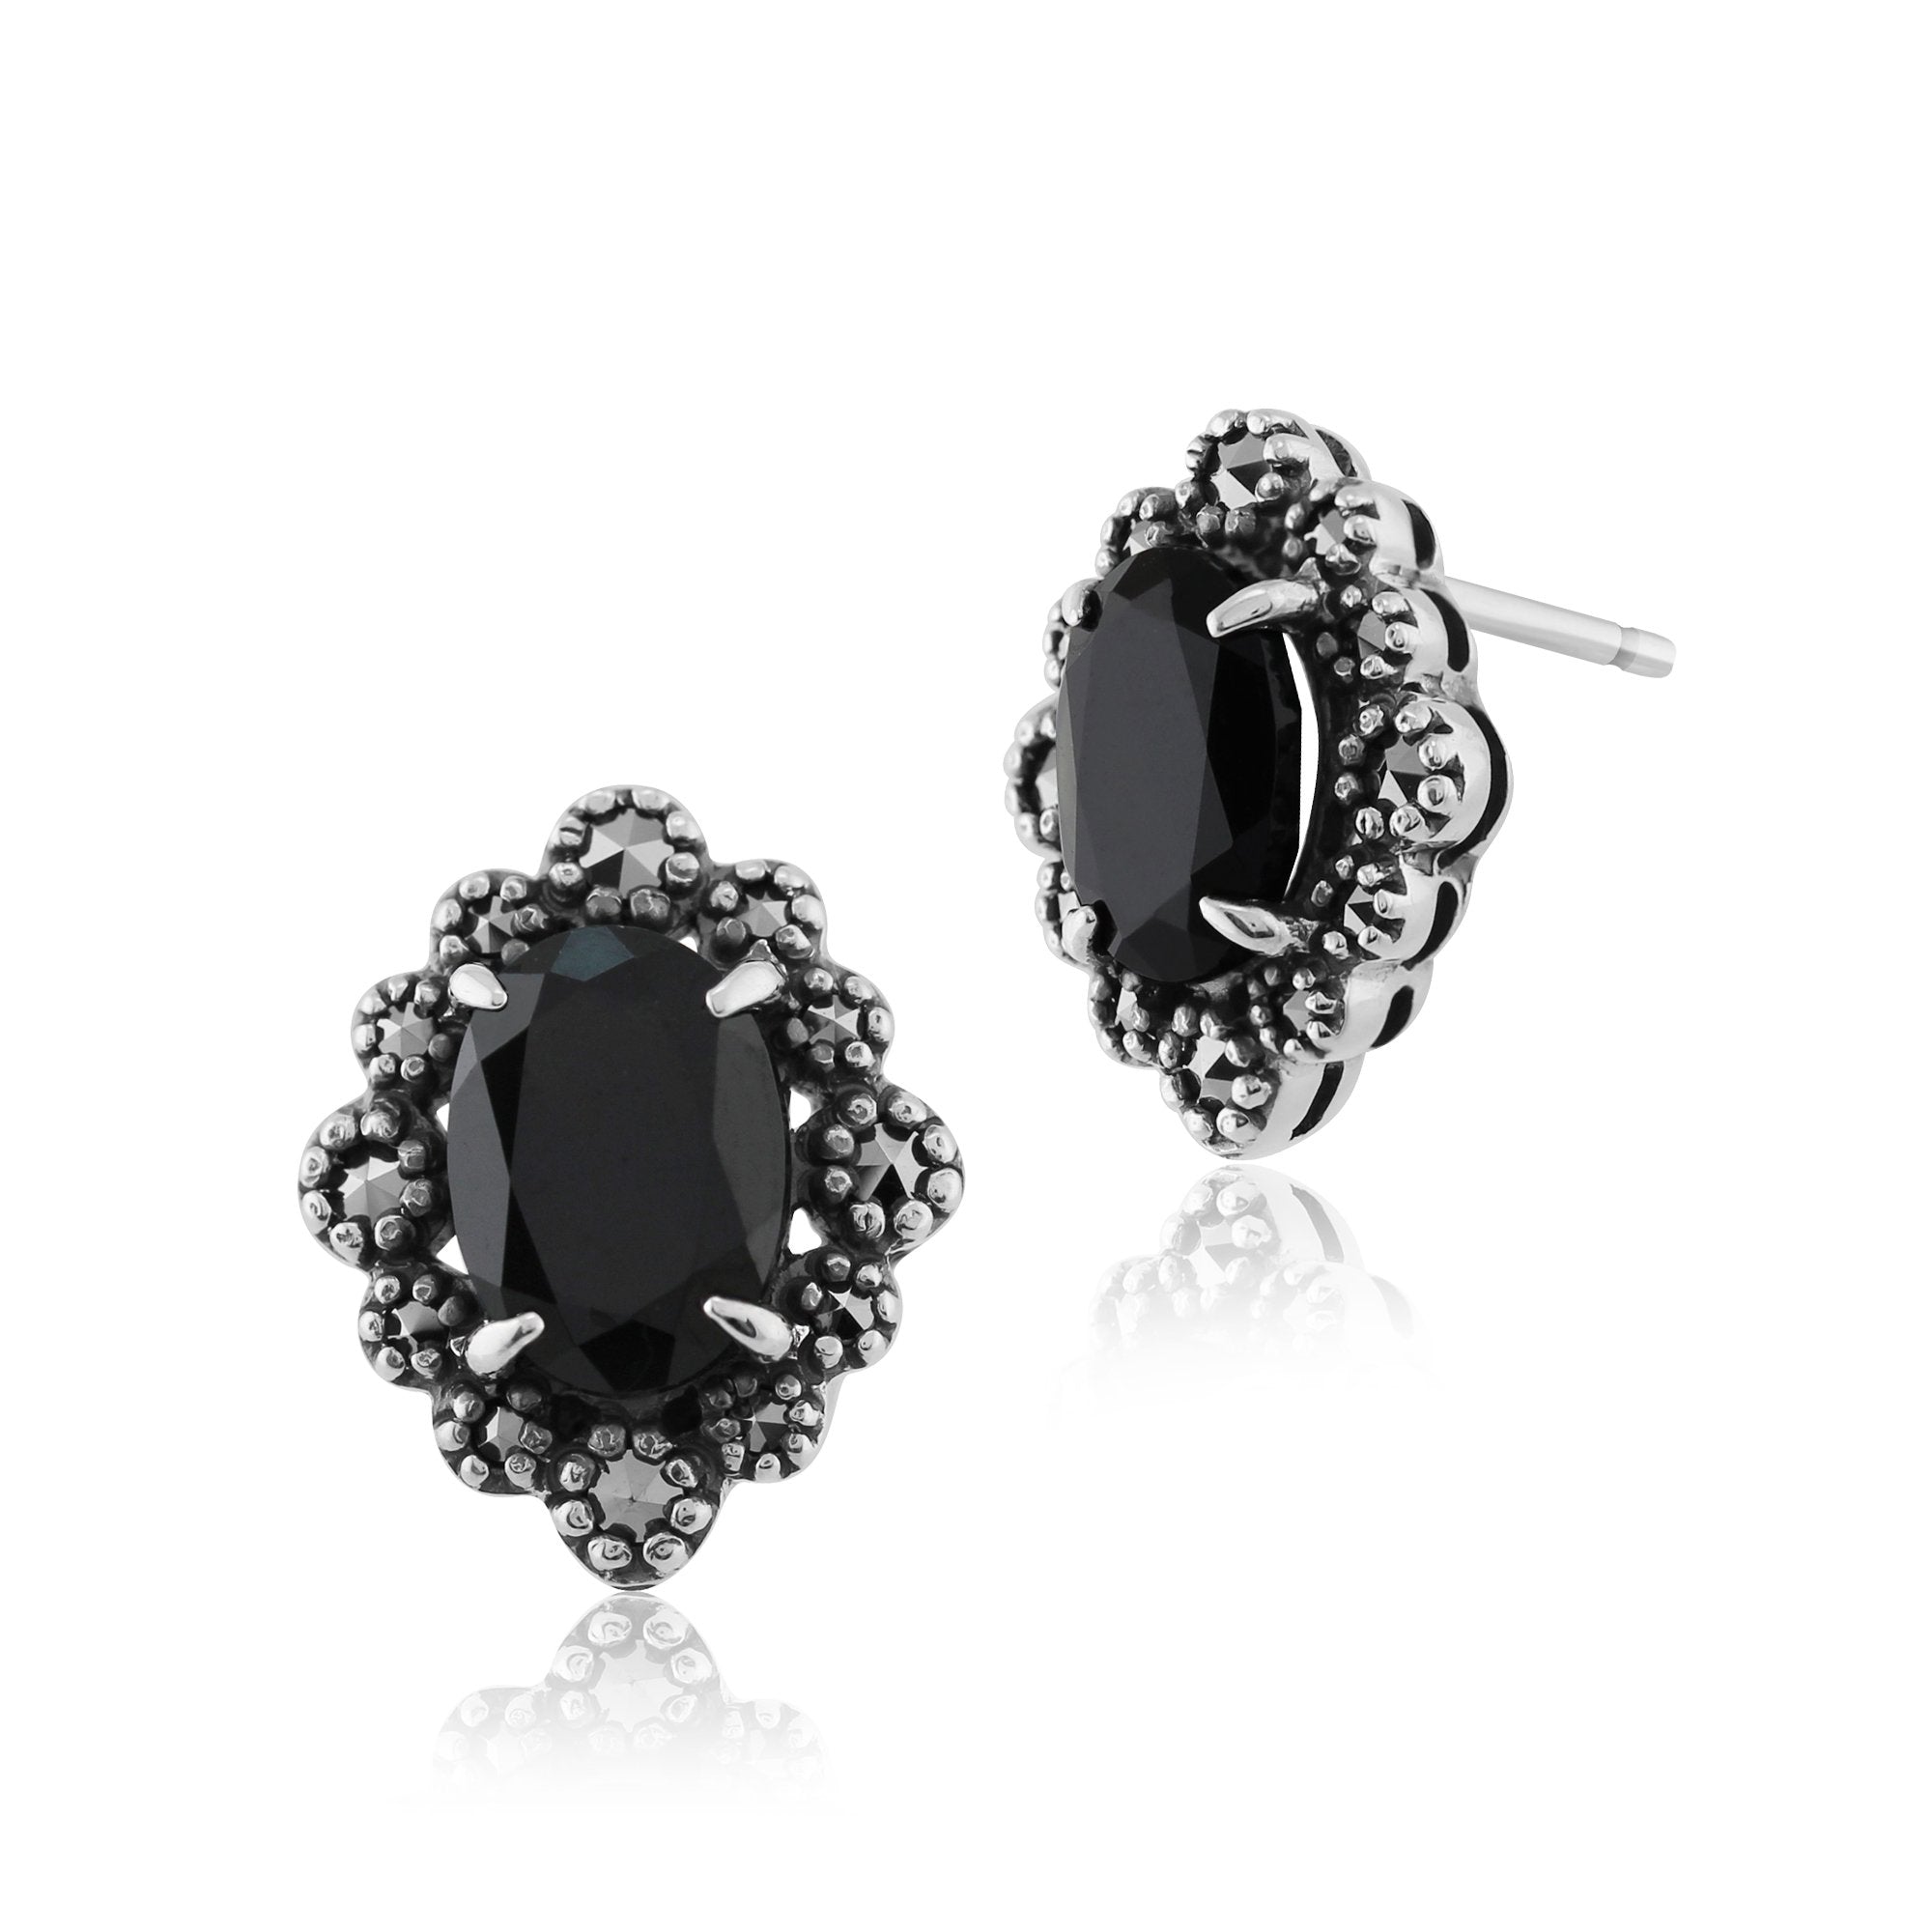 Art Deco Style Oval Black Spinel & Marcasite Stud Earrings in 925 Sterling Silver